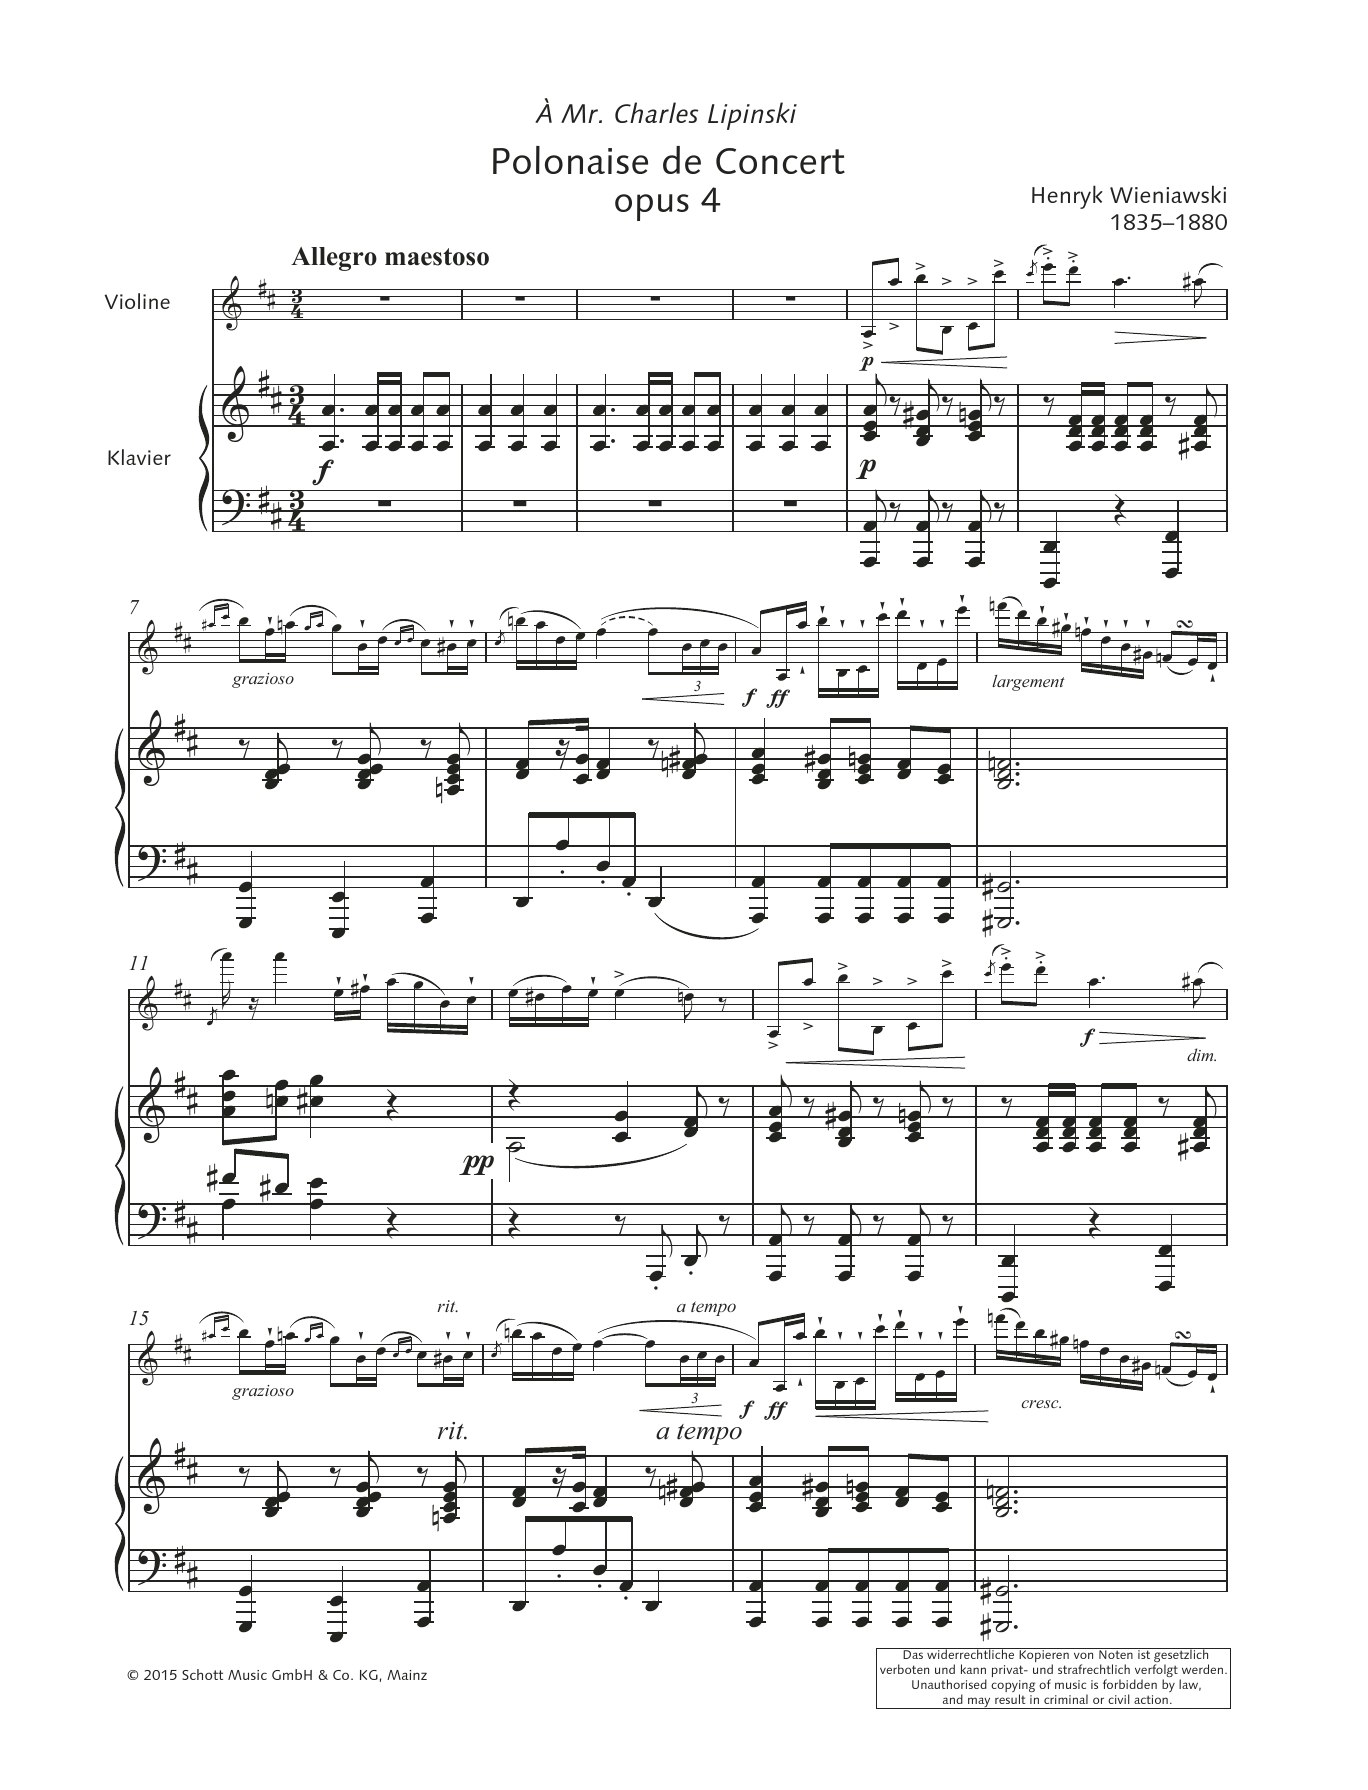 Download Henryk Wieniawski Polonaise de Concert Sheet Music